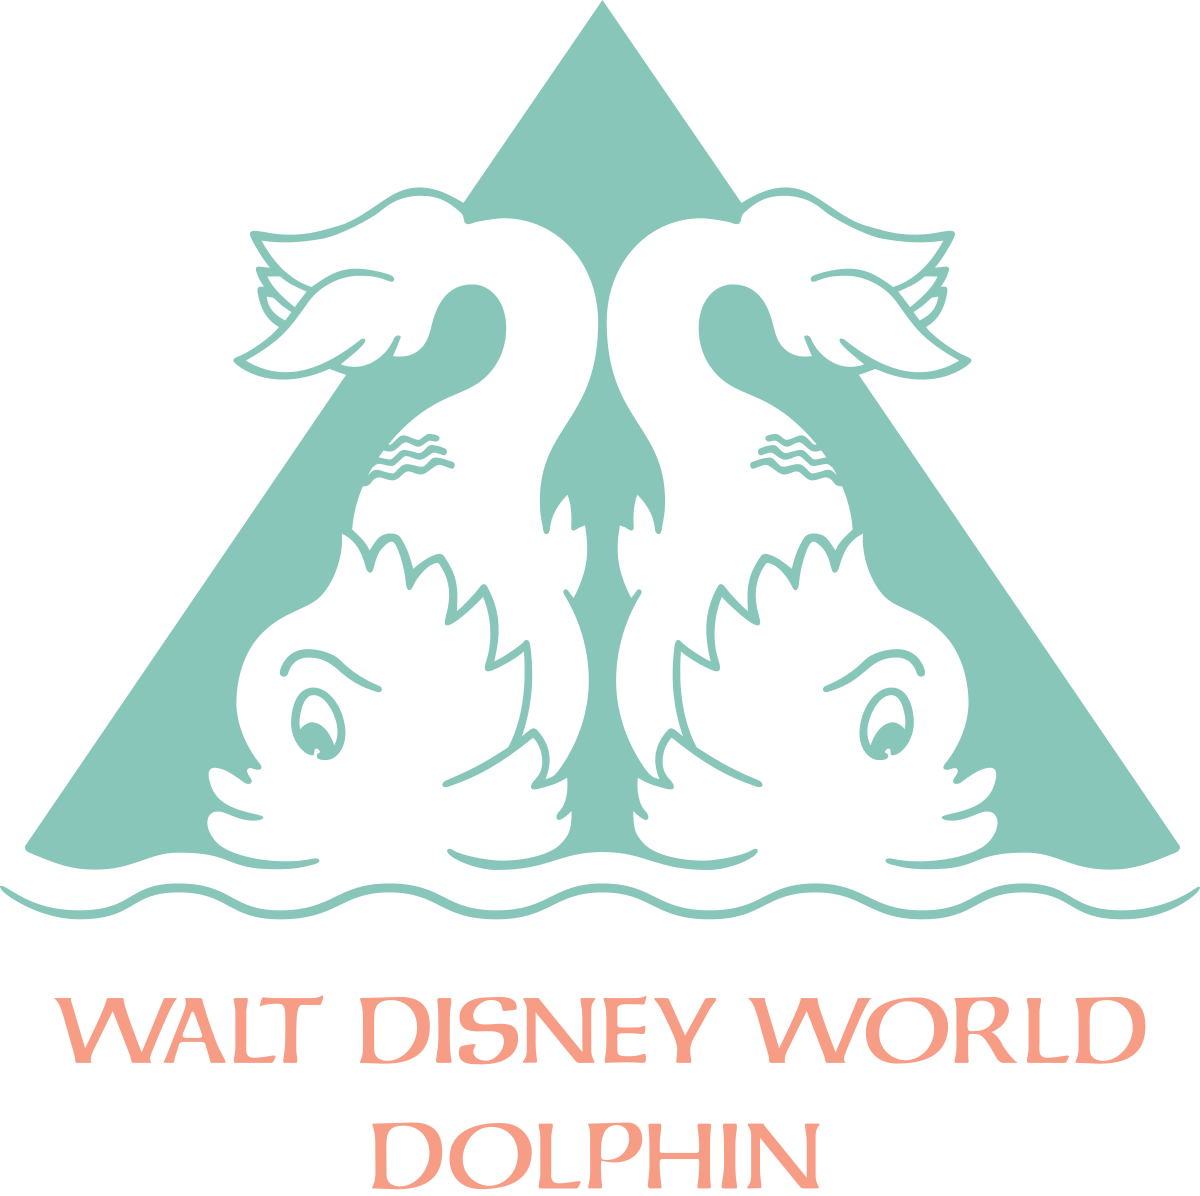 Walt Disney World Resort Logo - Walt Disney World Dolphin